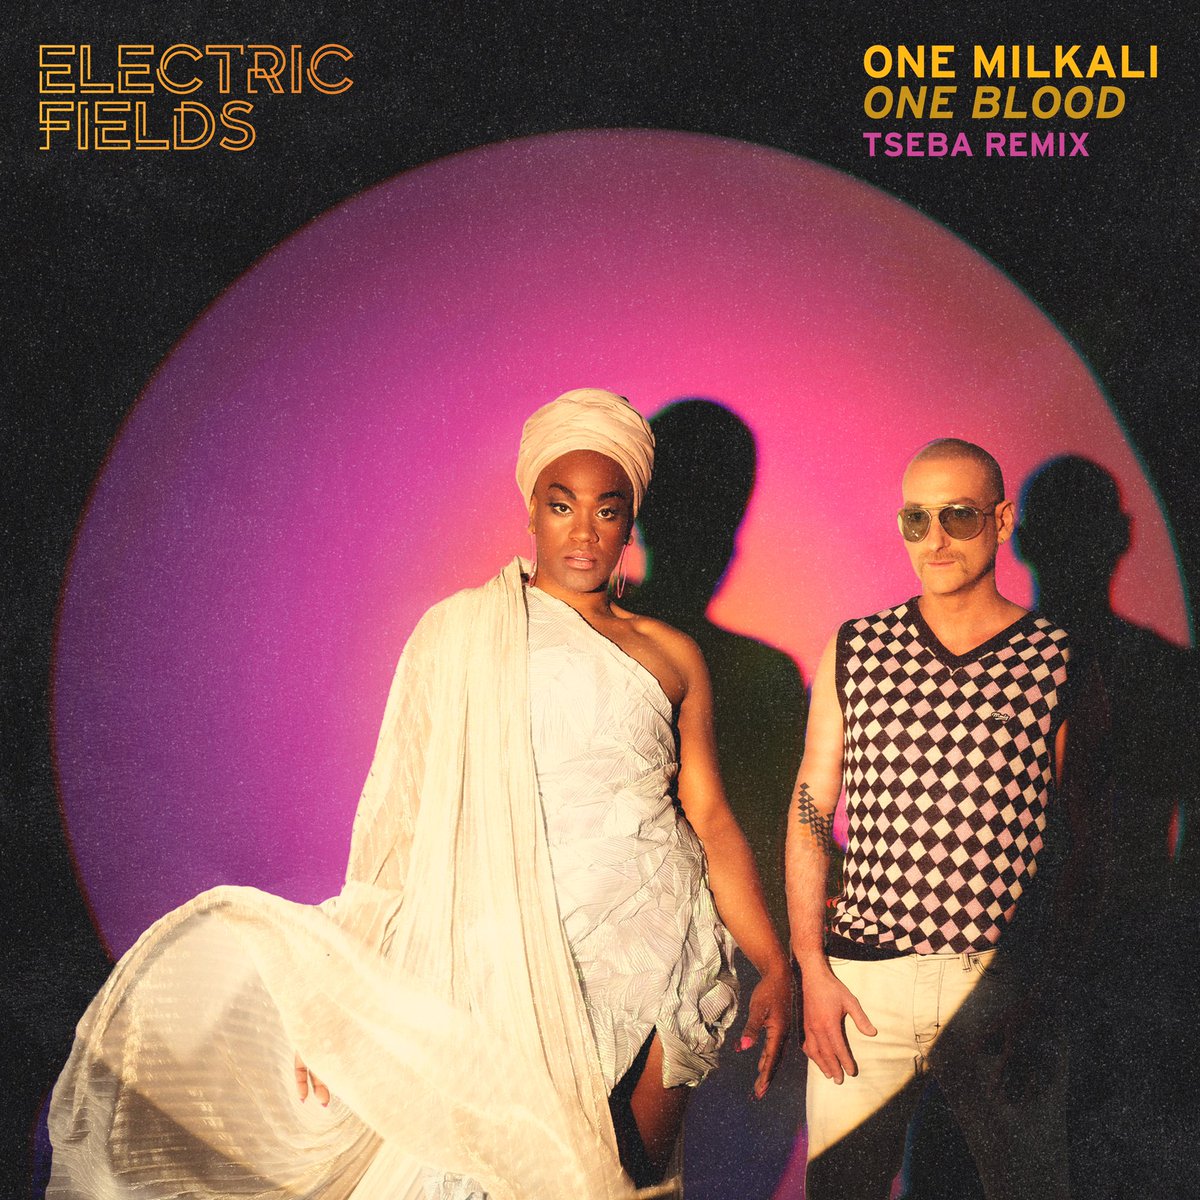 SURPRISE! One Milkali (One Blood) [Tseba Remix] OUT NOW! 🎉❤️ Listen here: efields.lnk.to/1milkaliremix